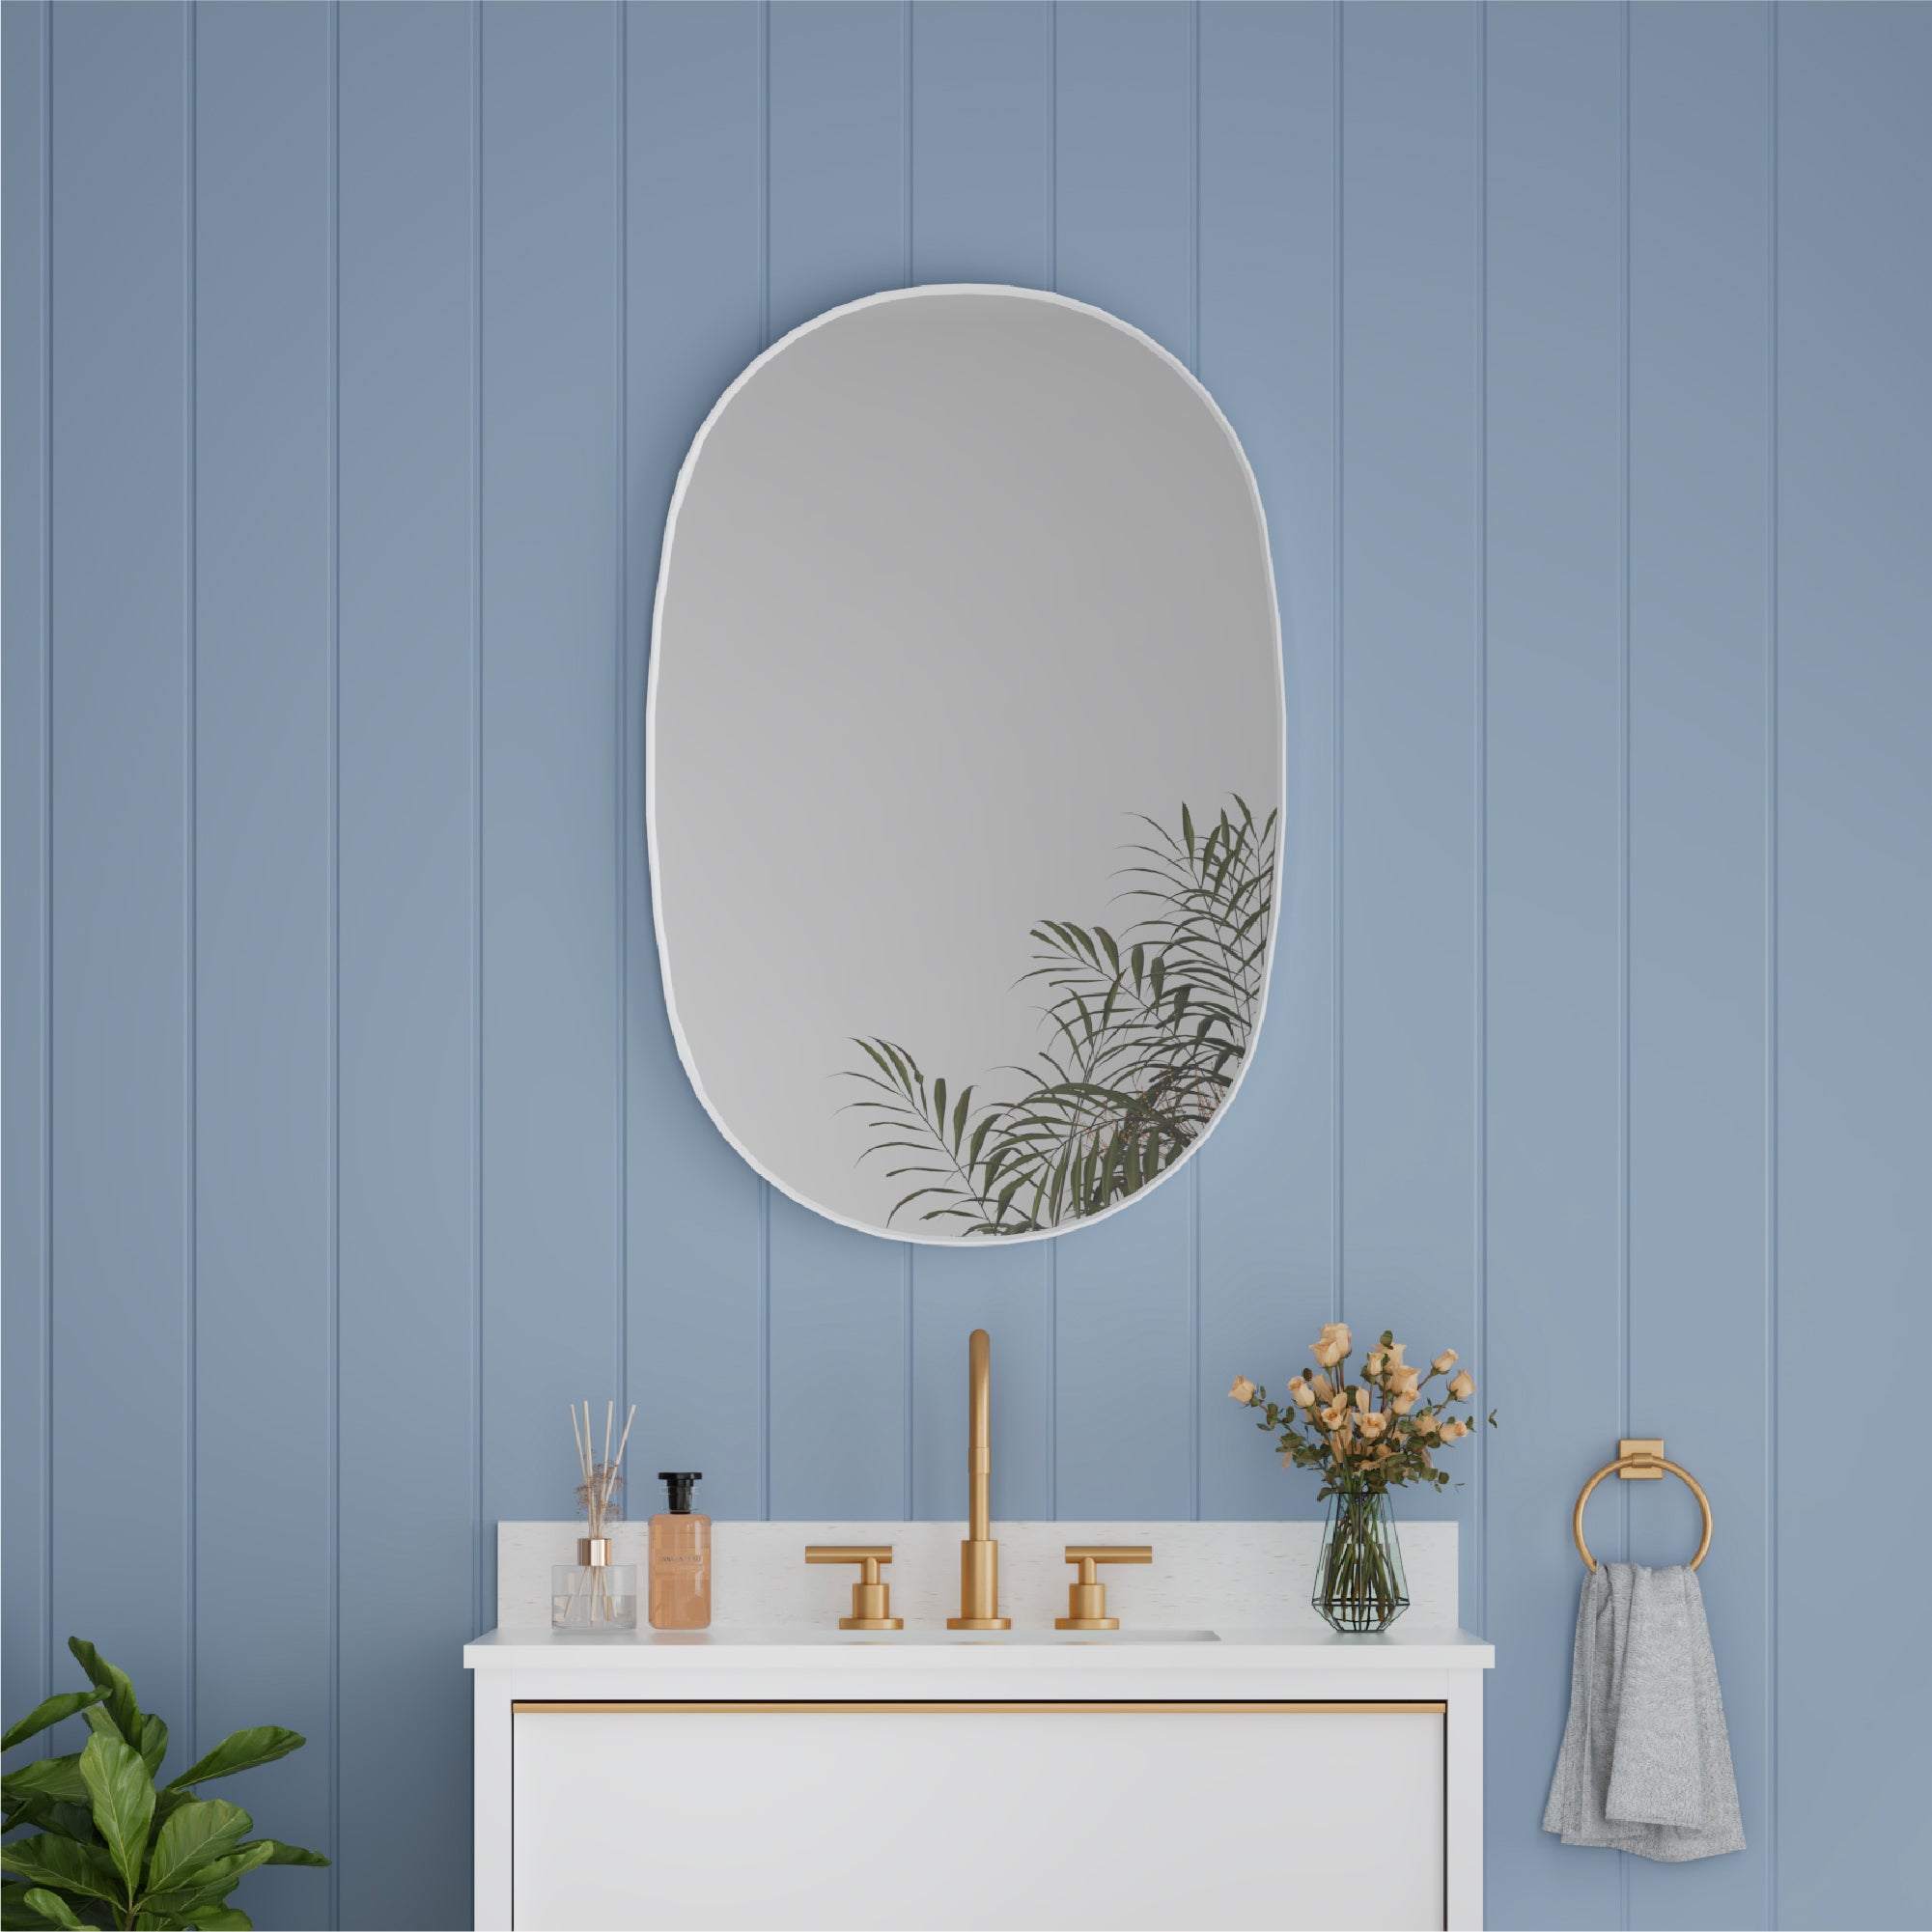 24 in. W. x 36 in. H Oval Framed Wall Bathroom Vanity Mirror in White